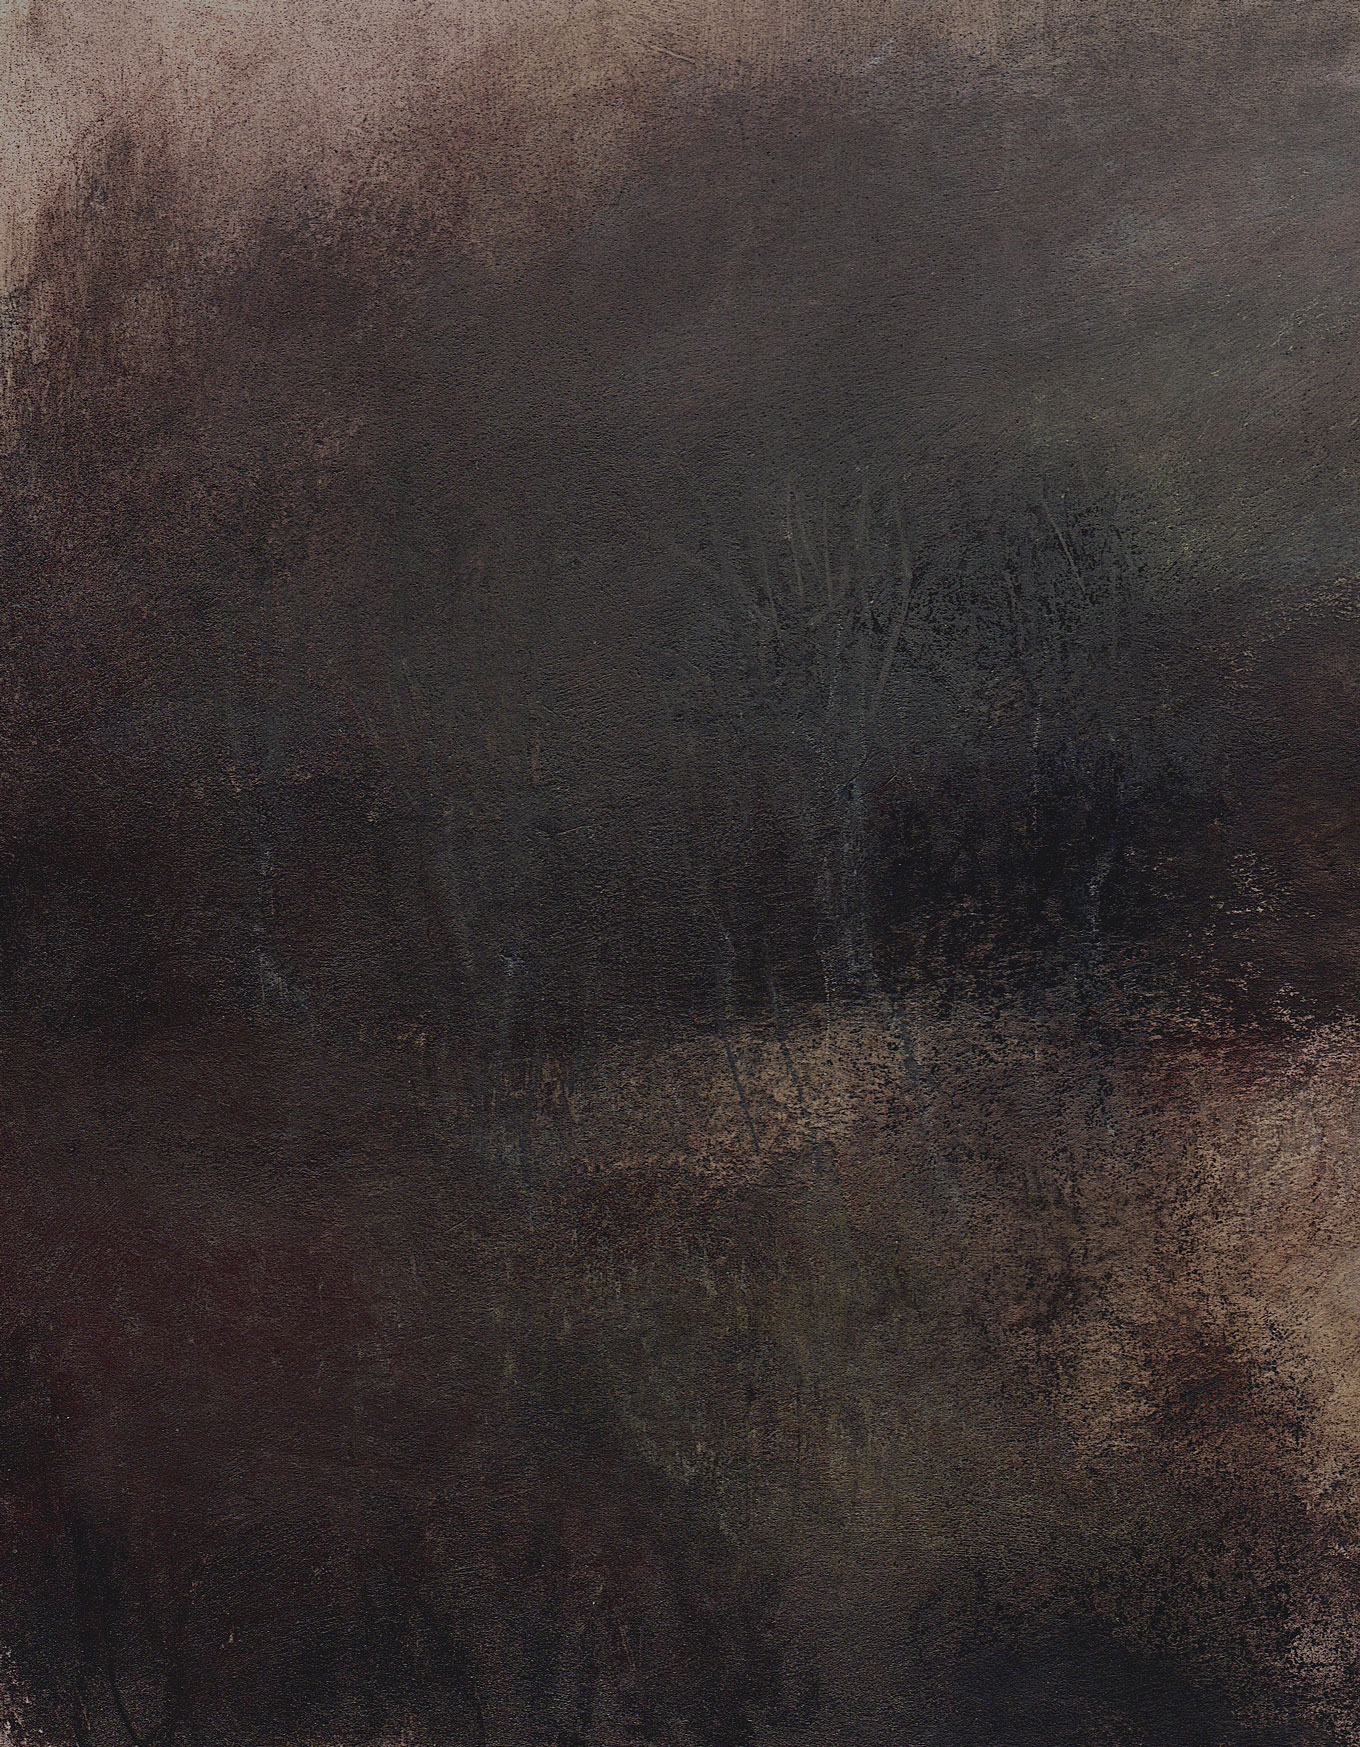 L1202 - Nicholas Herbert, British Artist, mixed media landscape painting of Chobham Common, mixed media on paper,2020